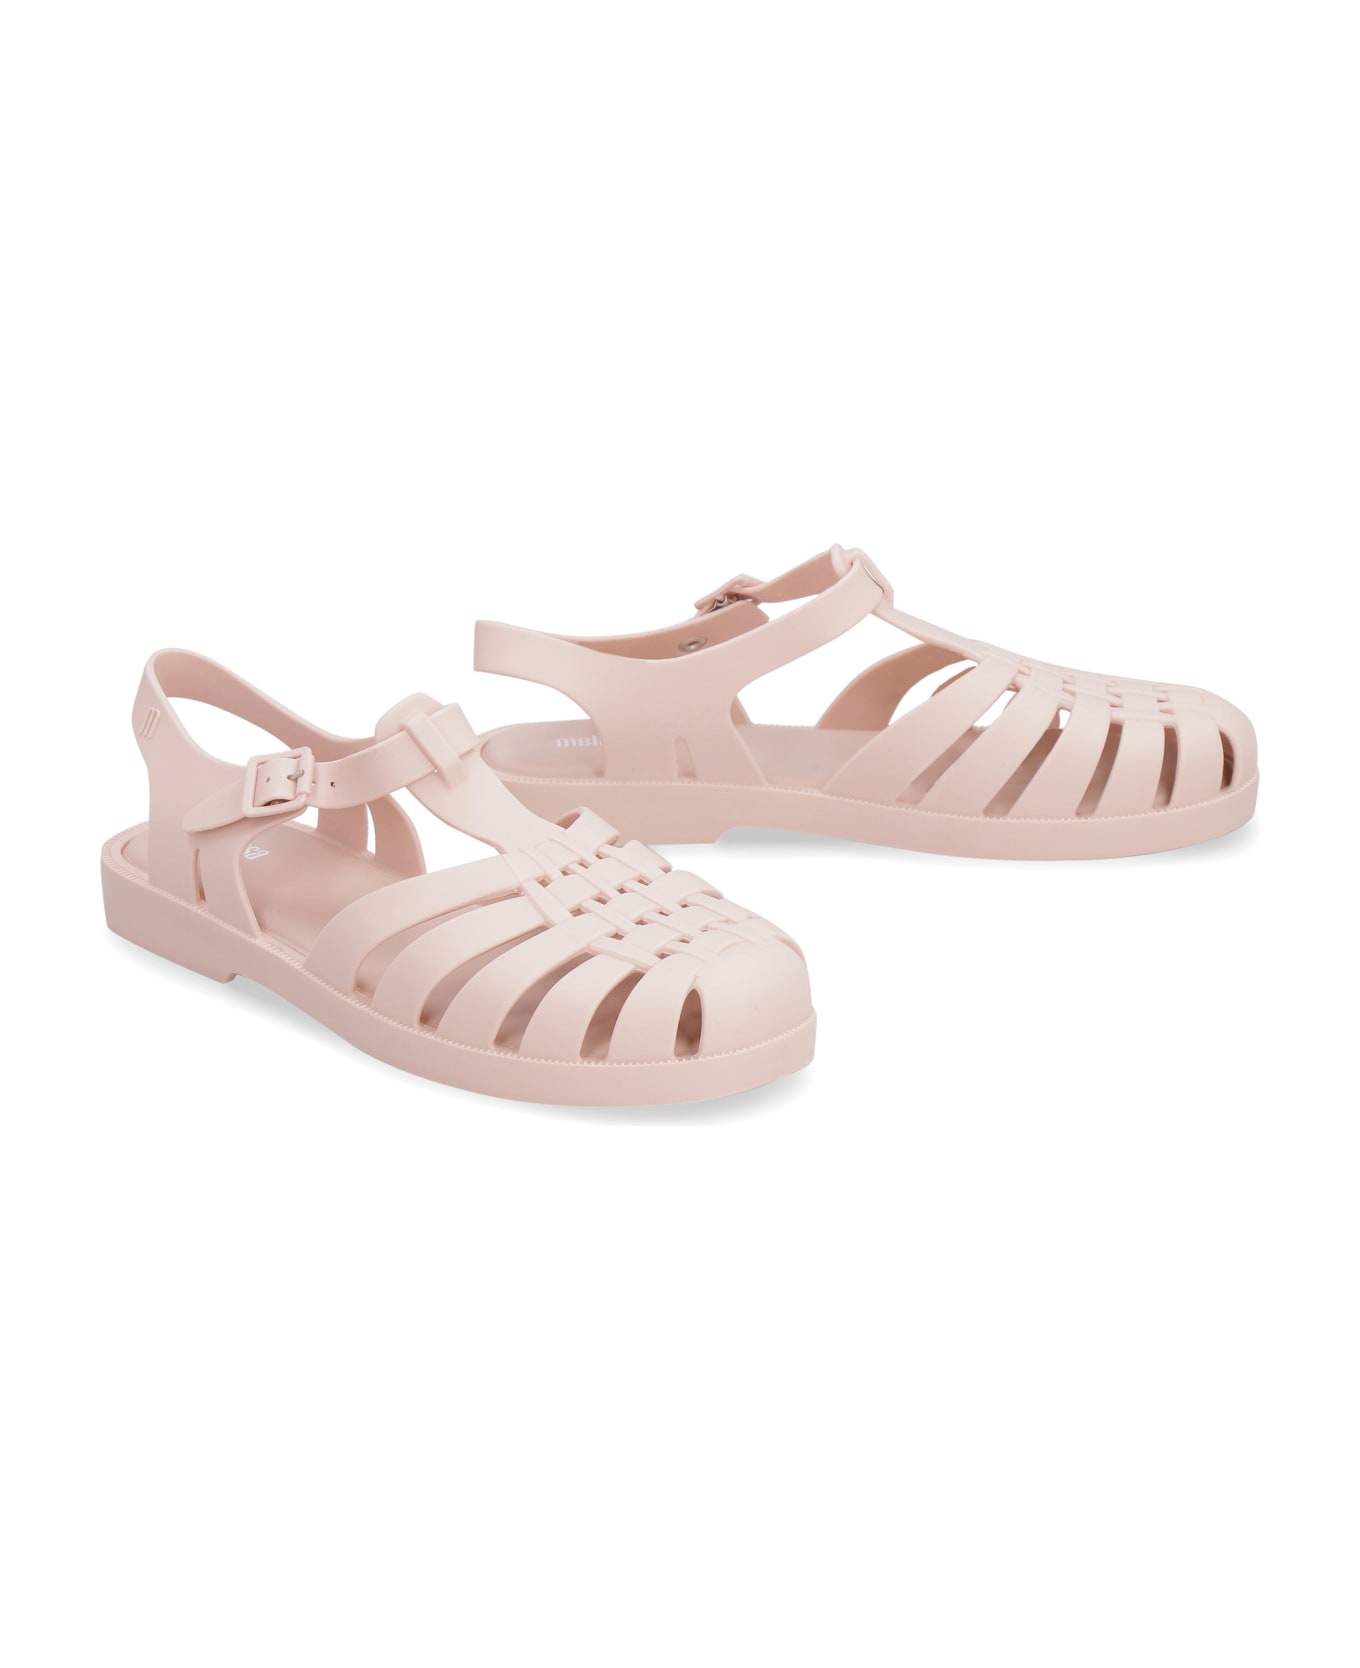 Melissa Possession Pvc Sandals - Pink サンダル